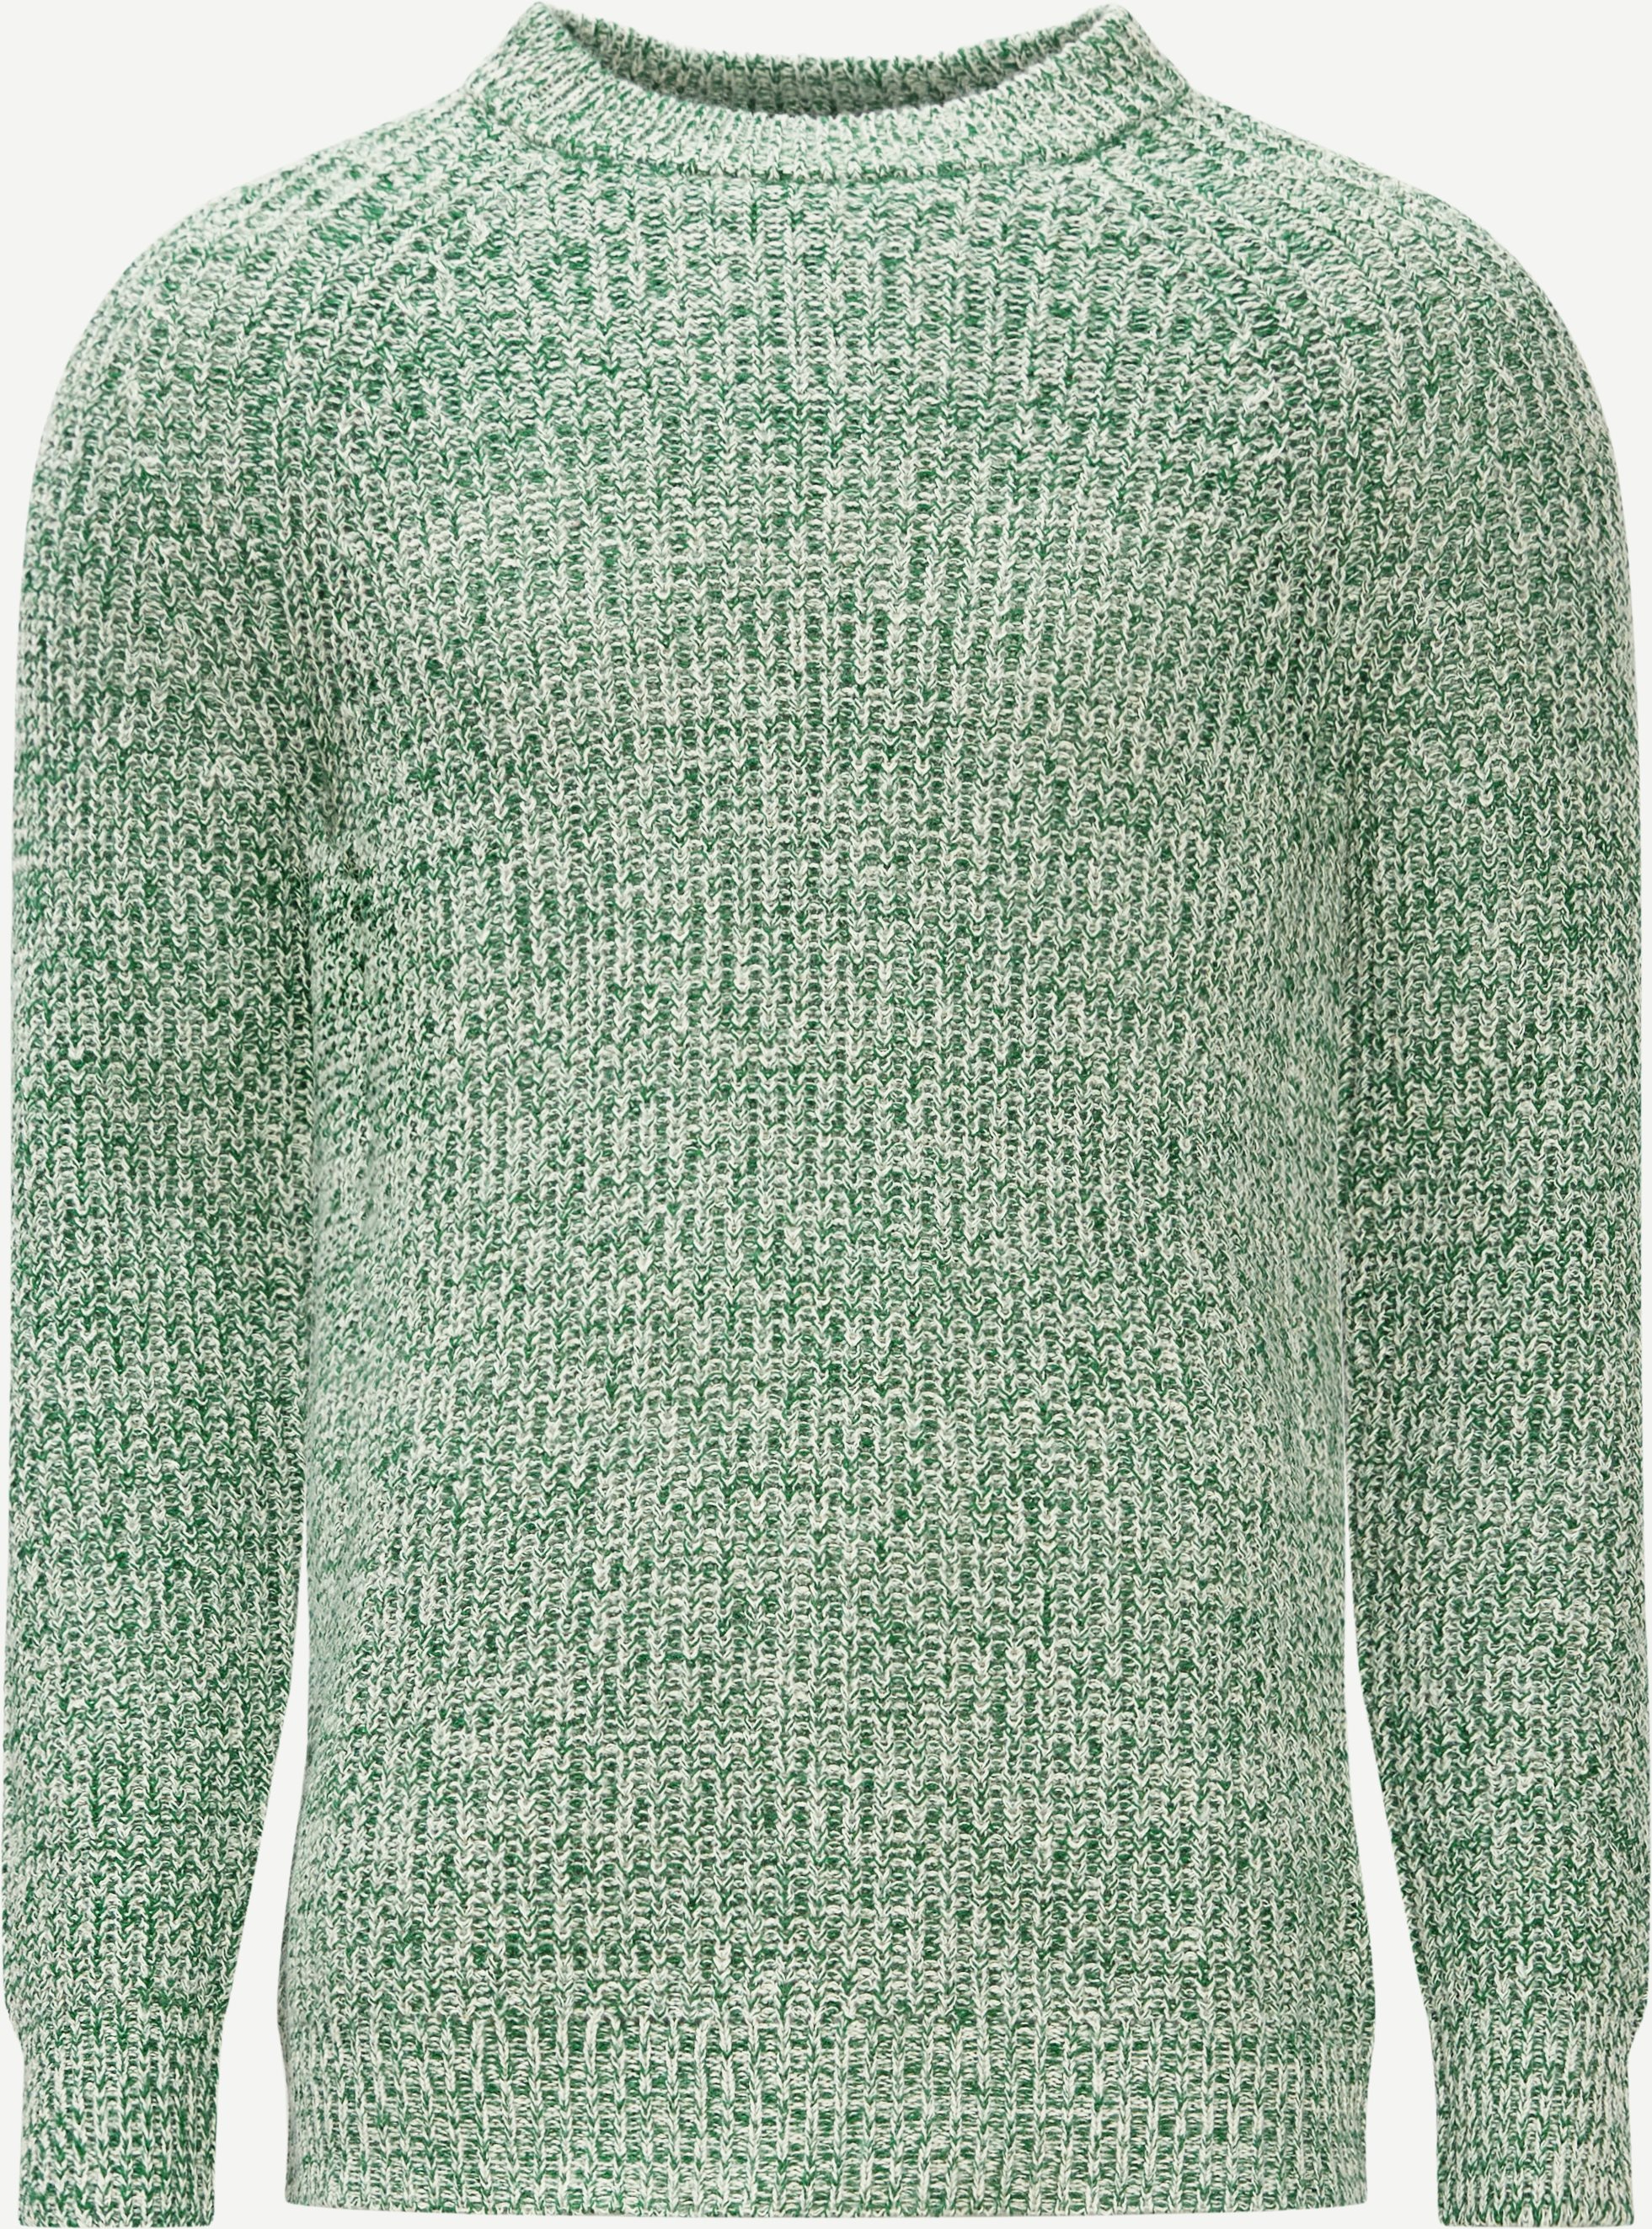 Knitwear - Regular fit - Green